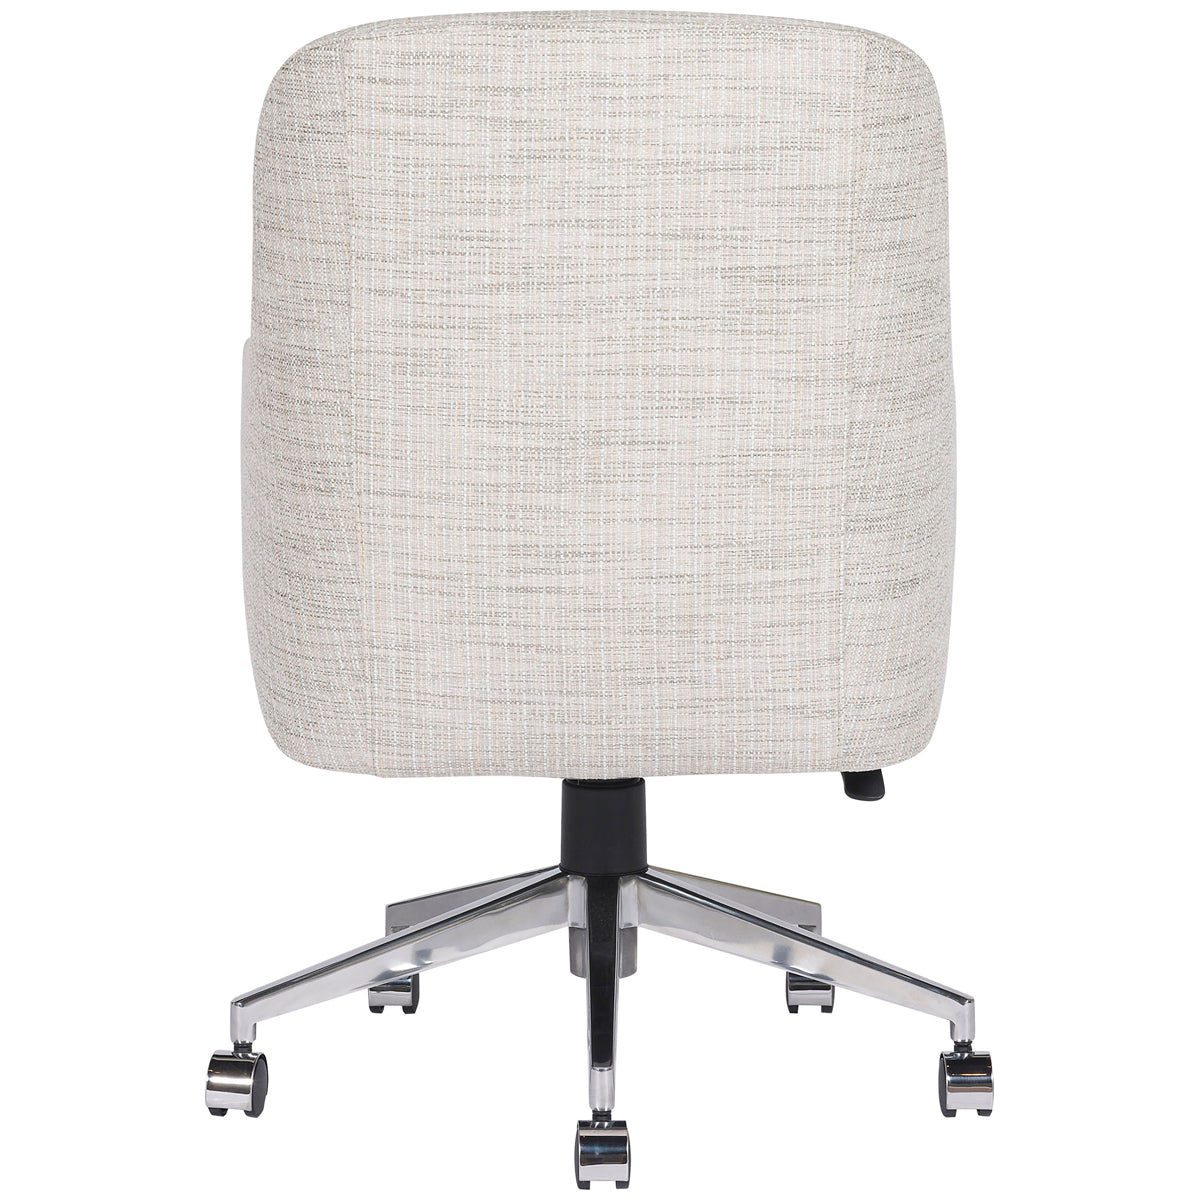 Vanguard Furniture Tompkins Desk Chair